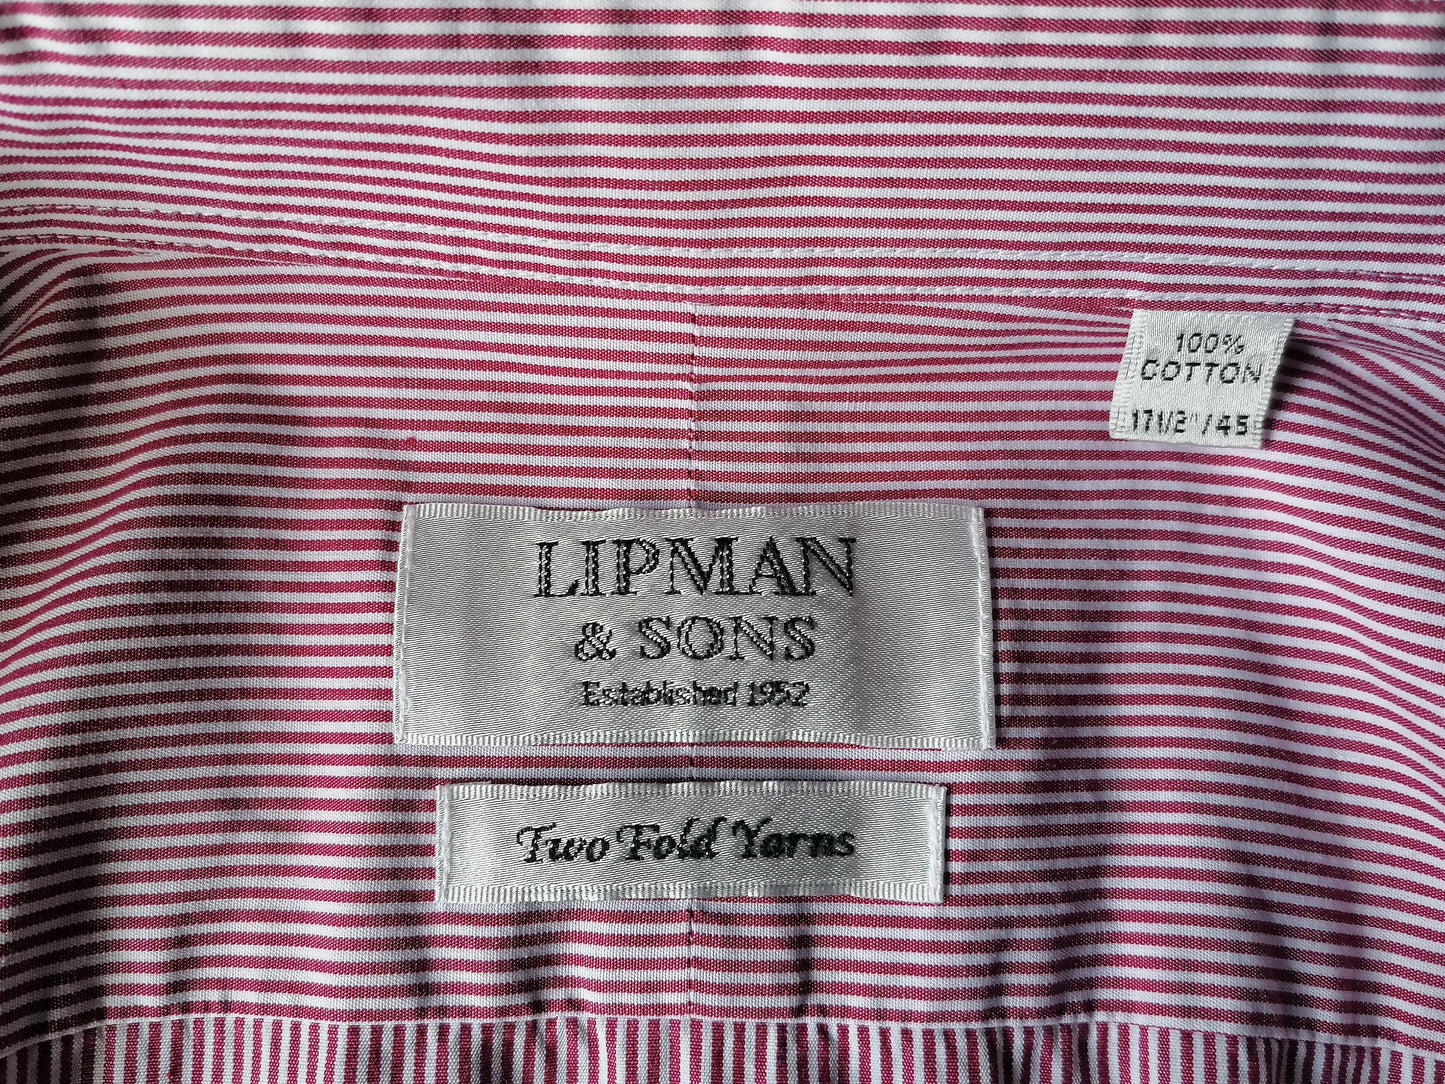 Lipman & Sons overhemd. Rood Wit gestreept. Maat 45 / XXL / 2XL. Type Manchetknoop. "Two Fold Yarn".